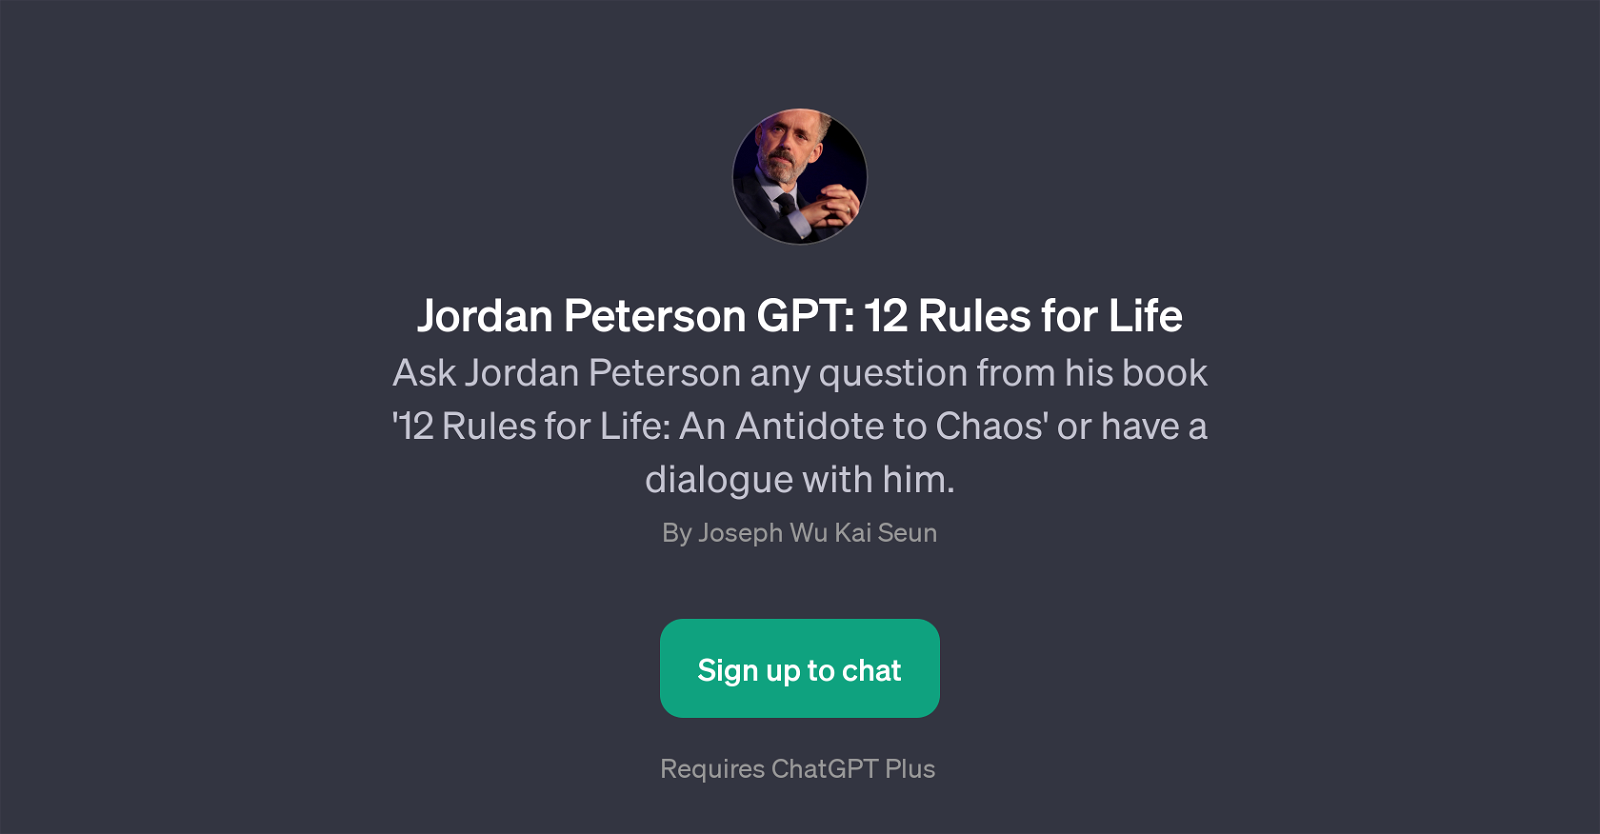 Jordan Peterson GPT: 12 Rules for Life website